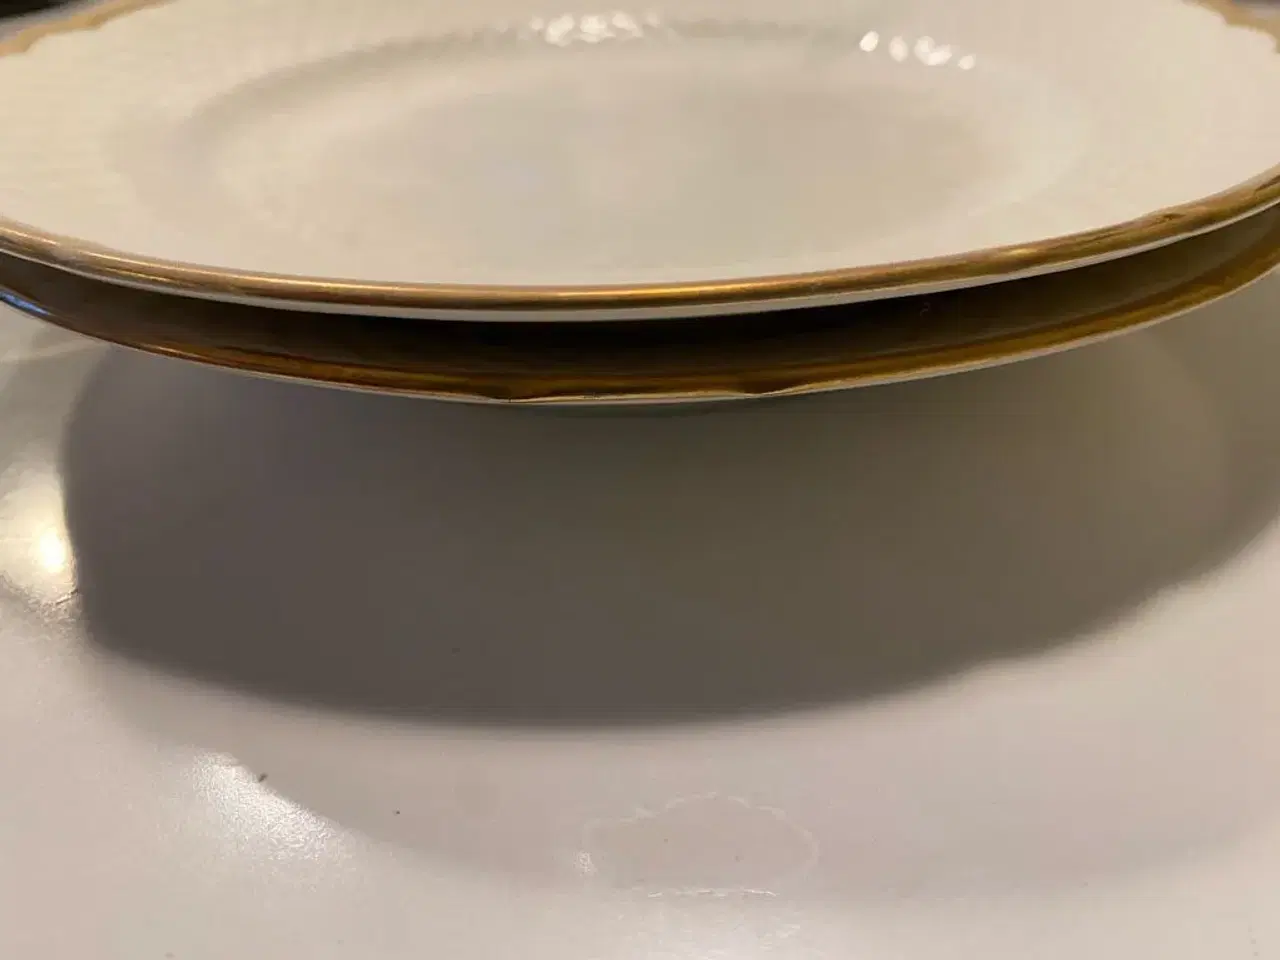 Billede 2 - 2 flotte tallerkener med flot guld kant